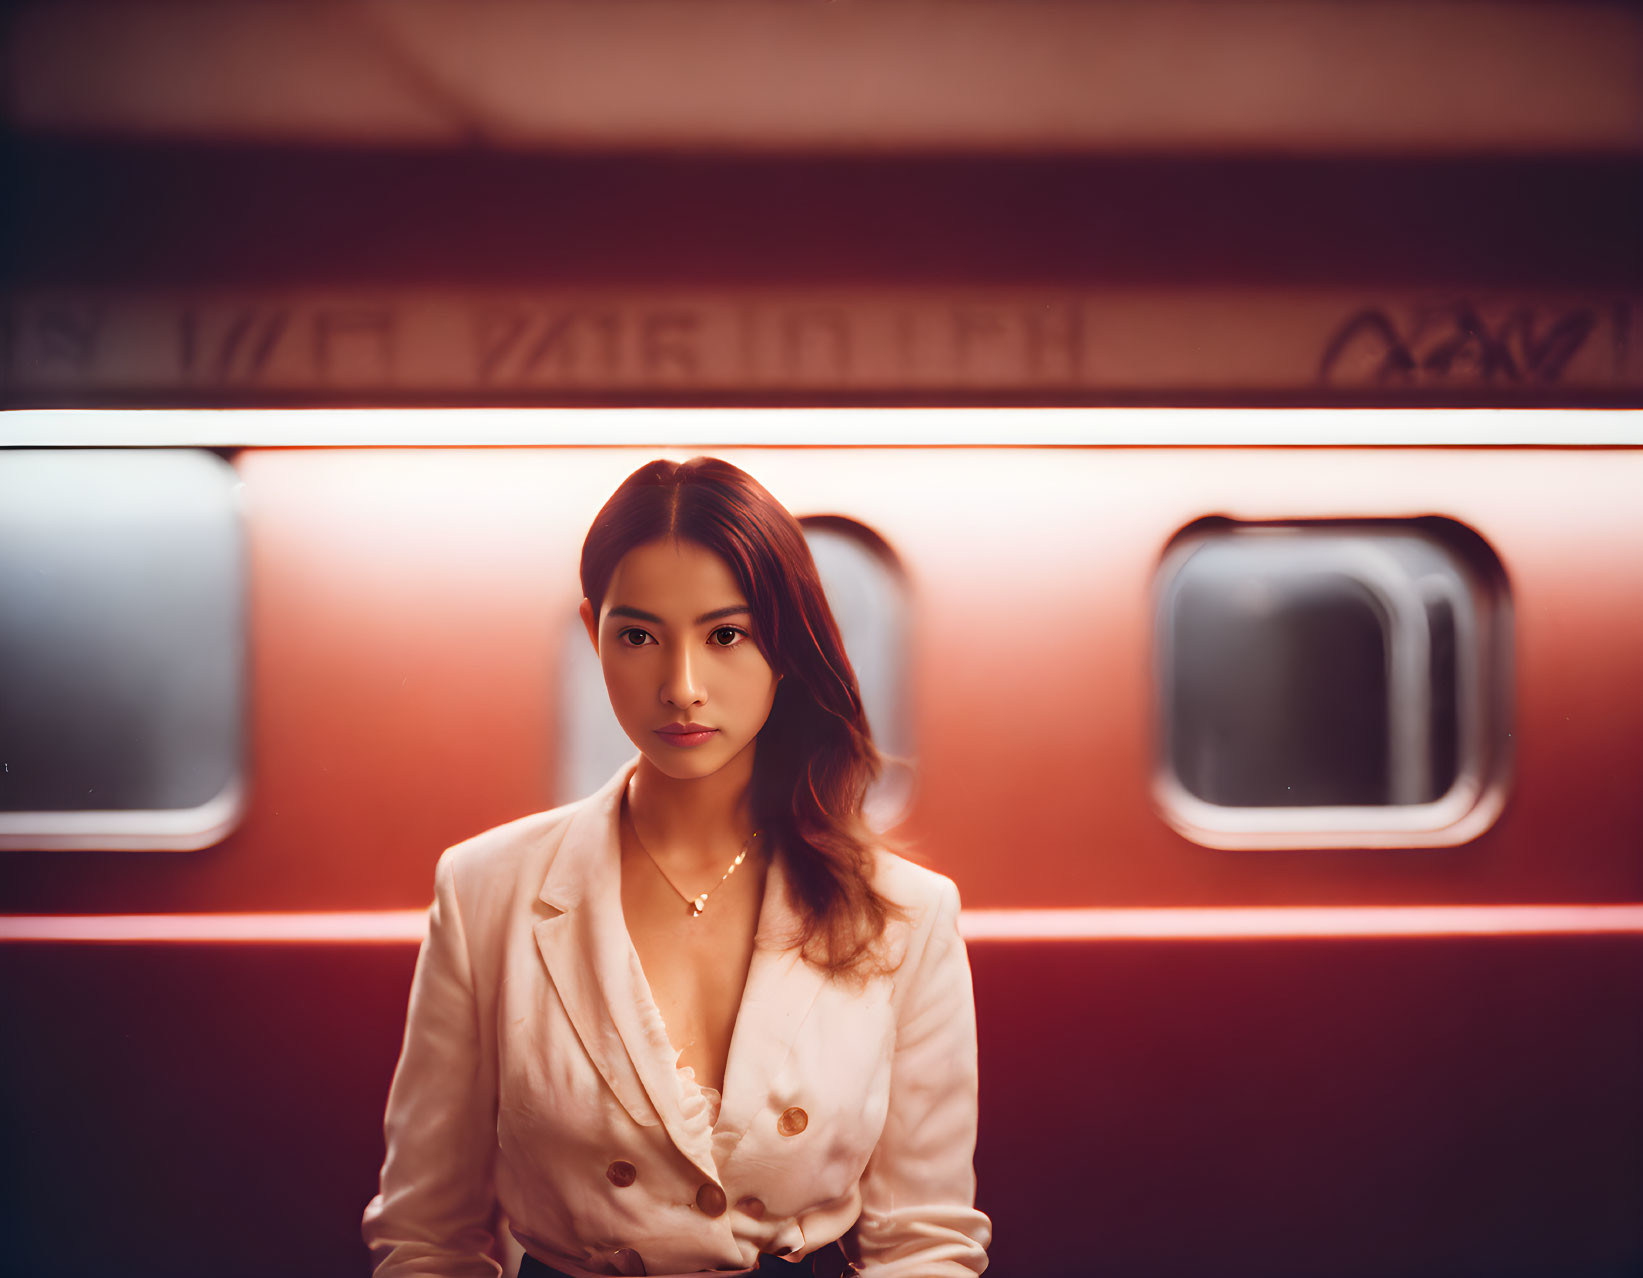 Woman in Beige Blazer Standing in Front of Red-Lit Train